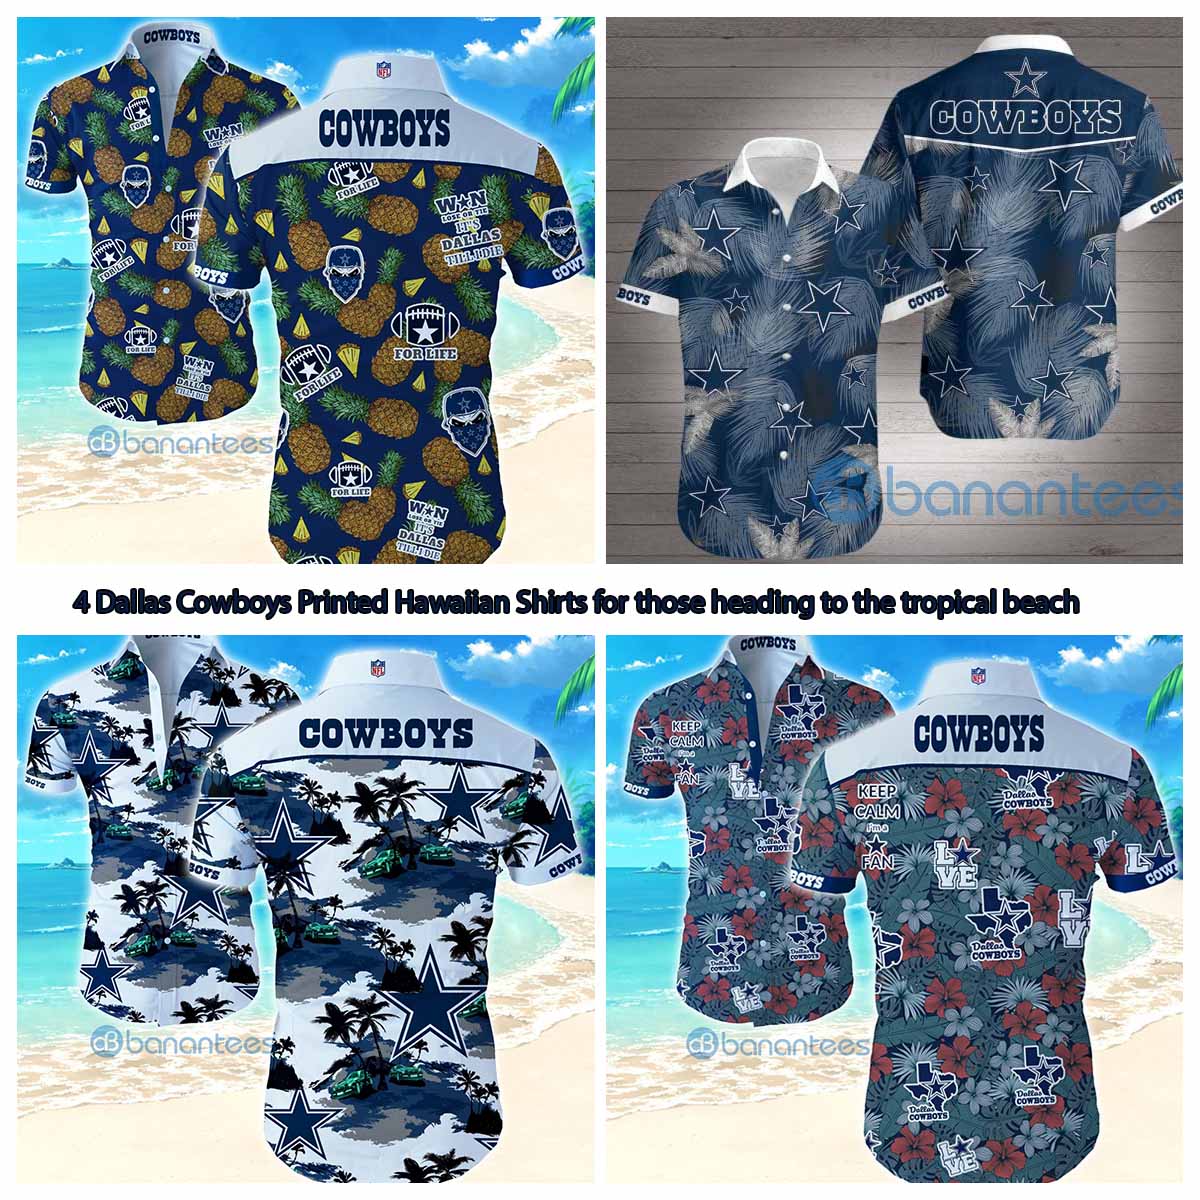 4 Dallas Cowboys Printed Hawaiian Shirts for those heading to the tropical beach